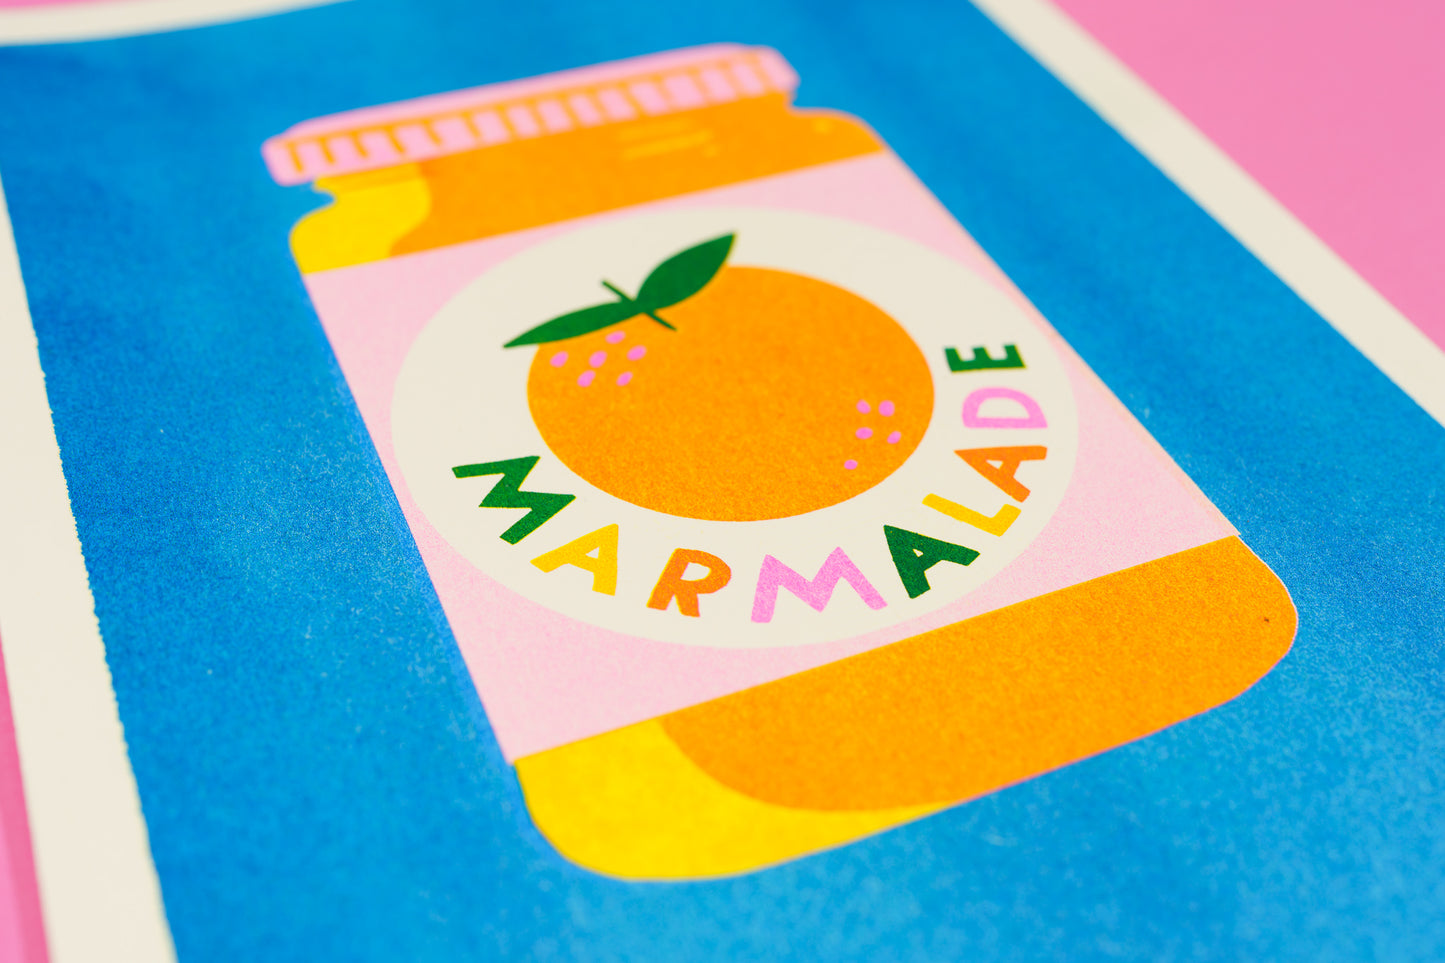 Marmalade Print